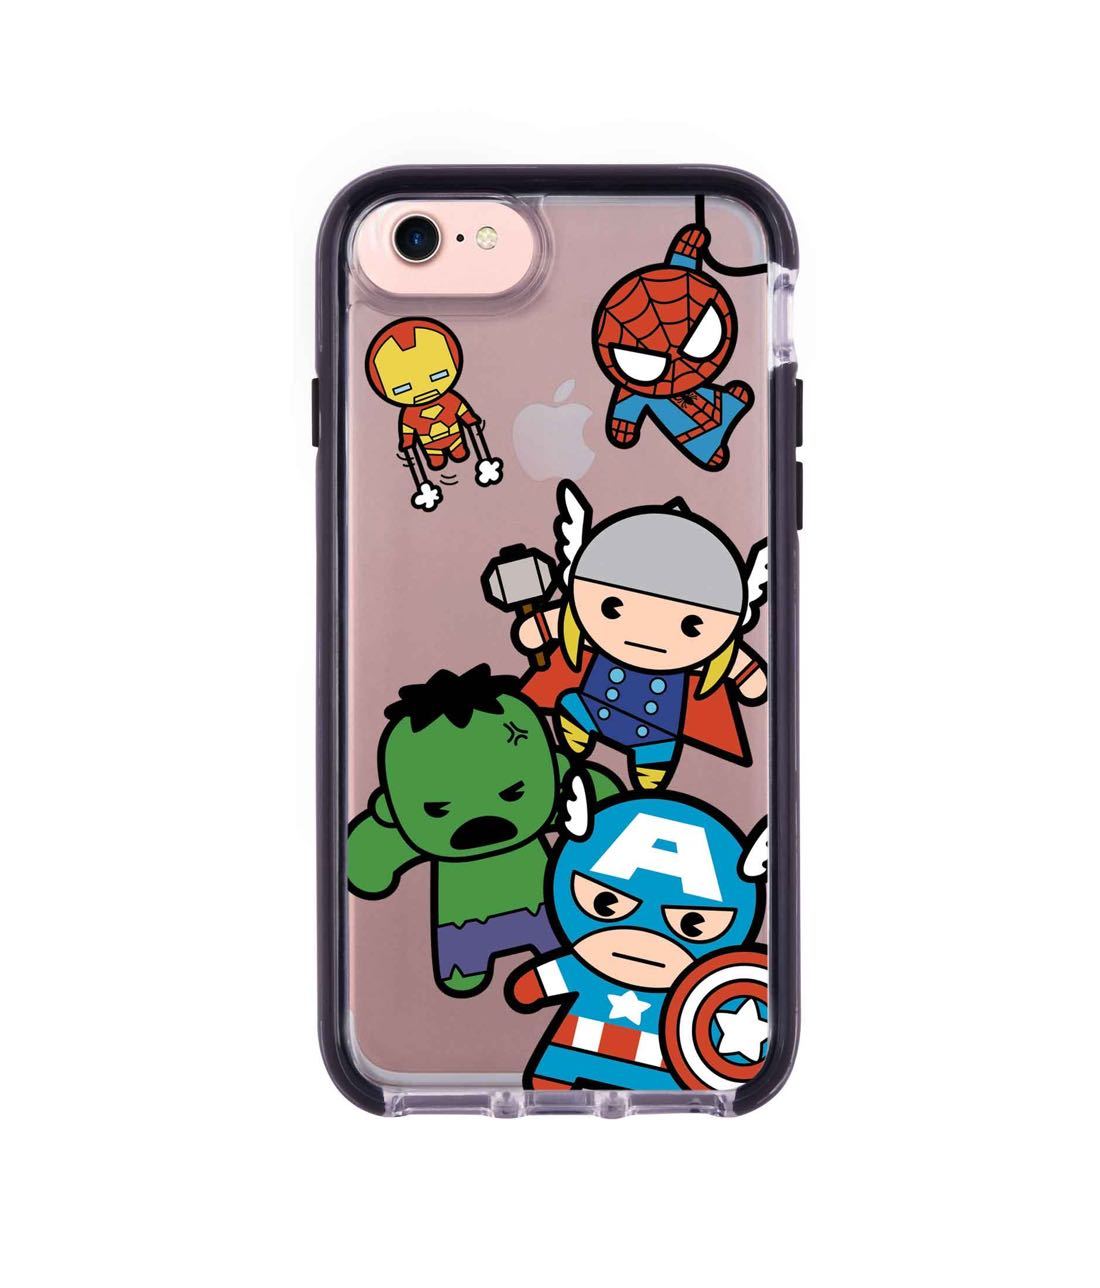 Kawaii Art Marvel Comics - Extreme Phone Case for iPhone 7